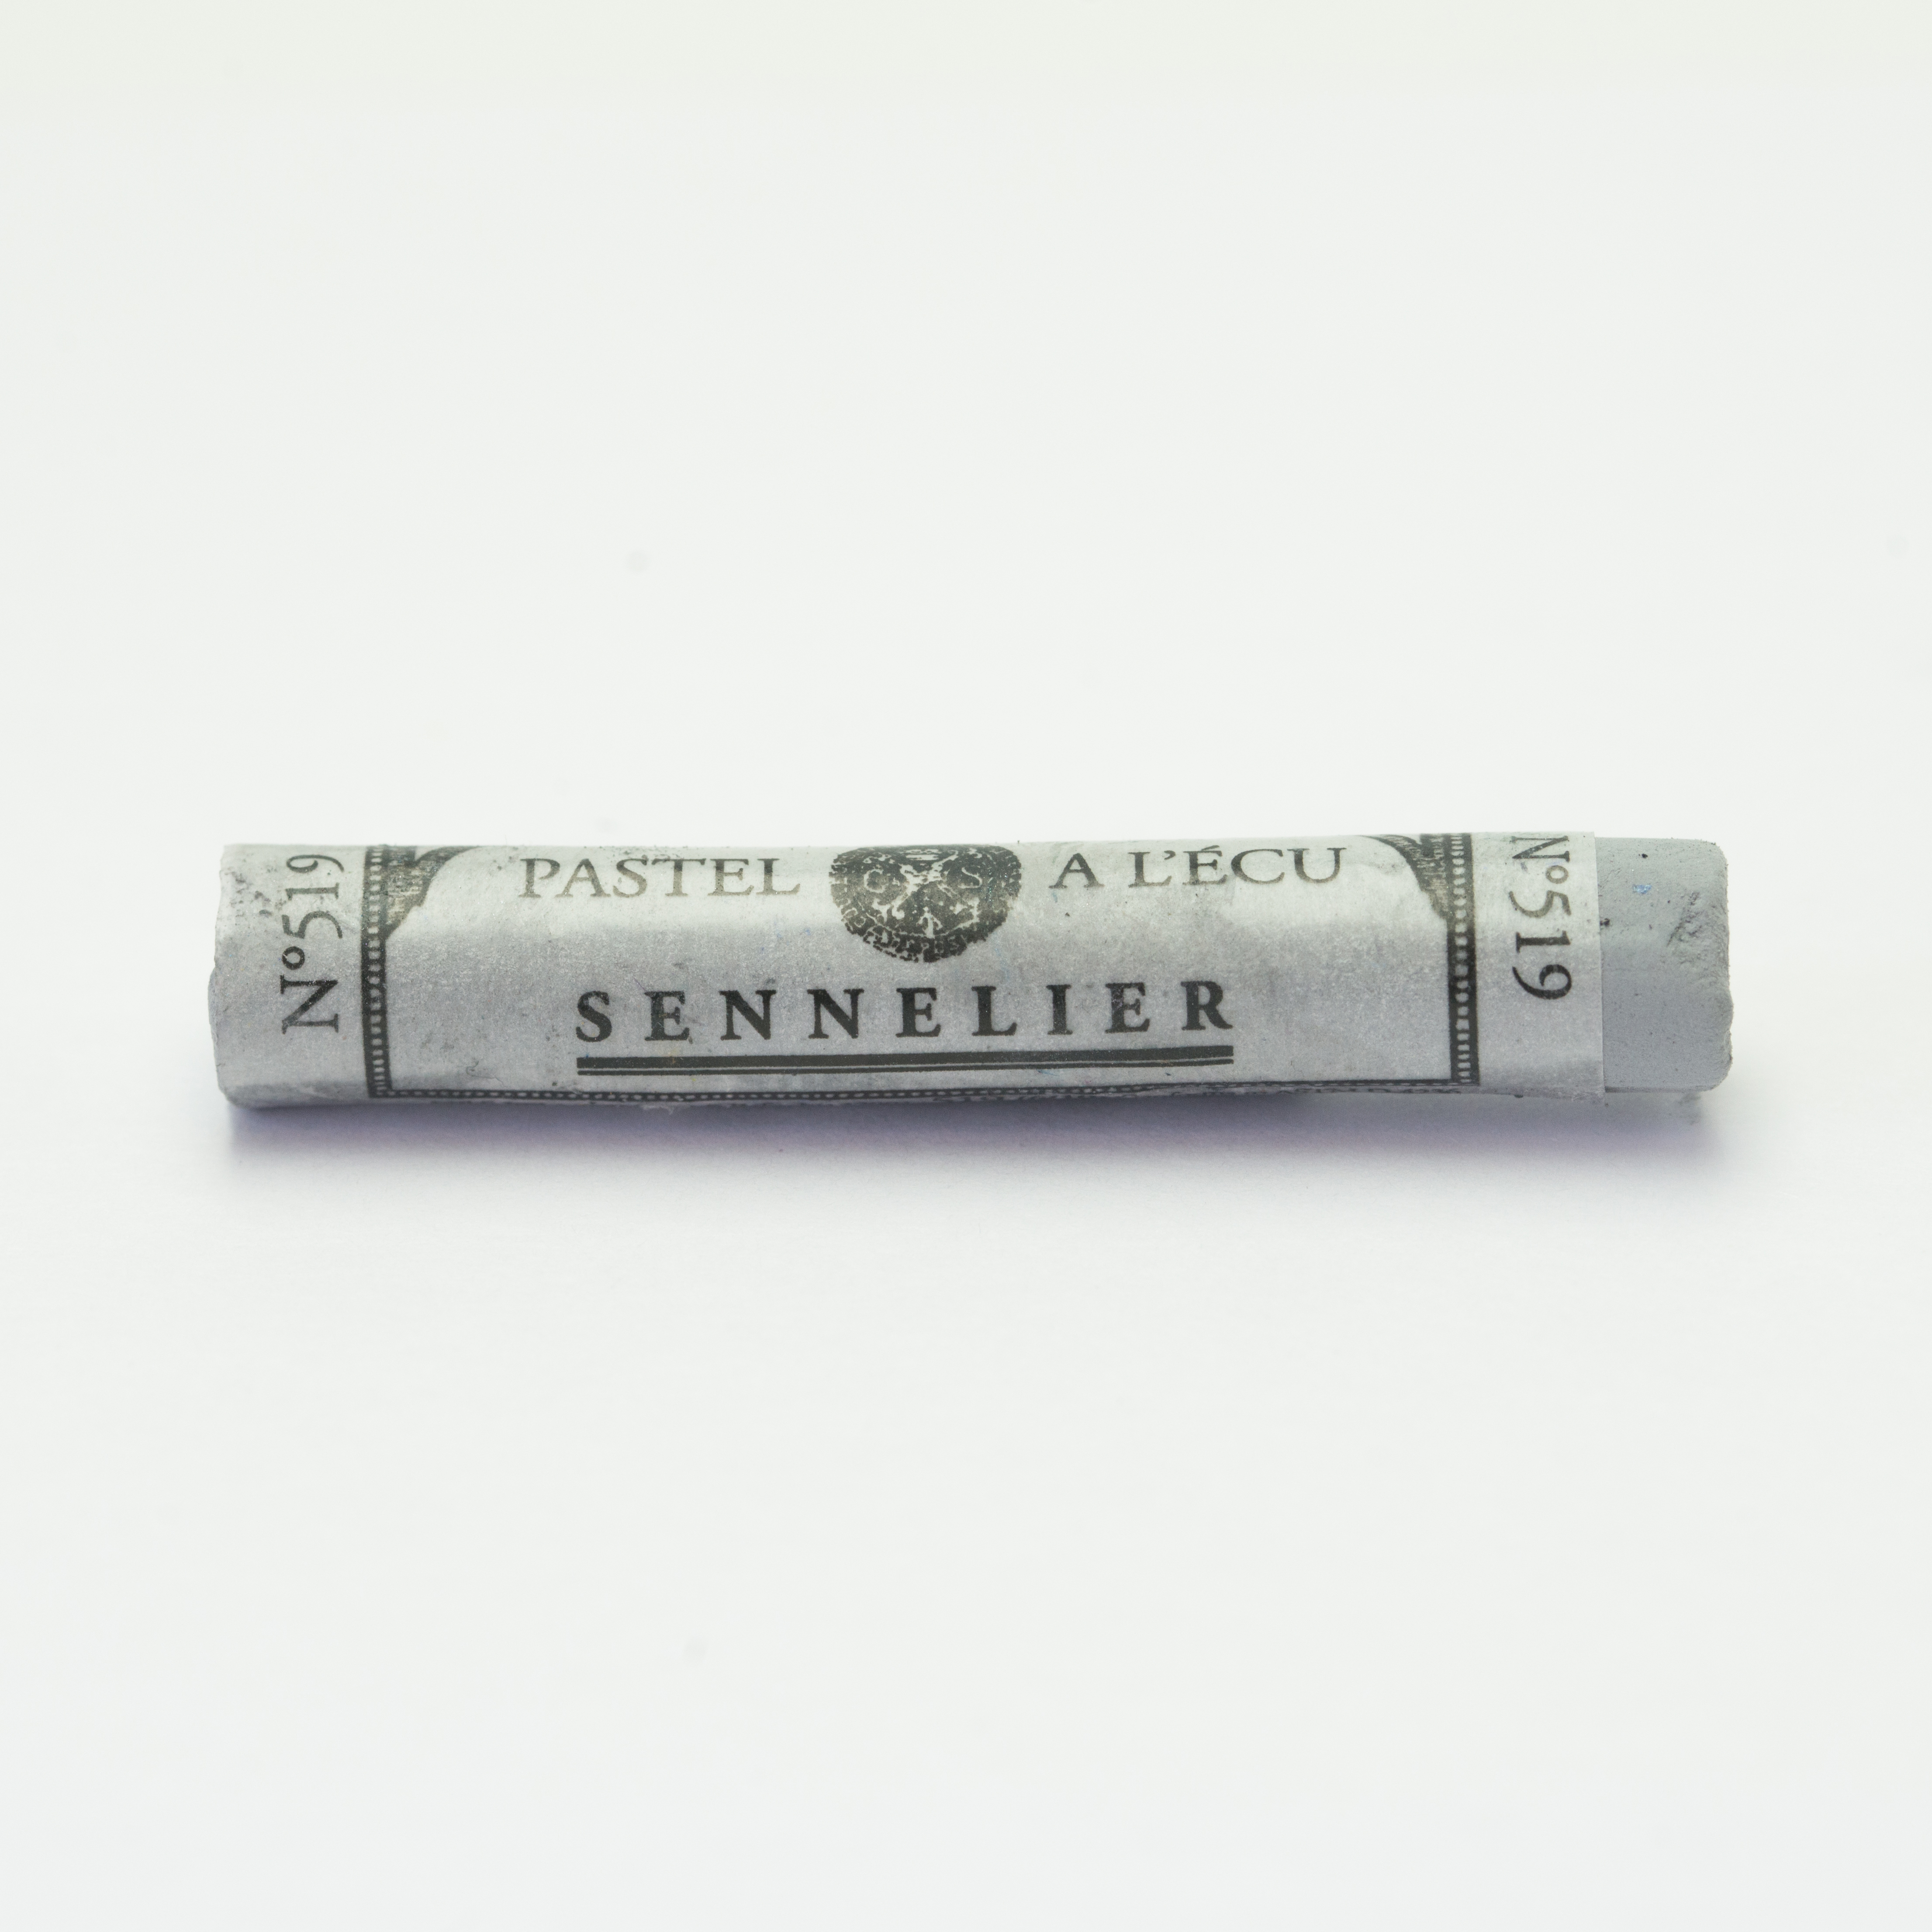 Sennelier Extra Soft Pastels - Grey 519